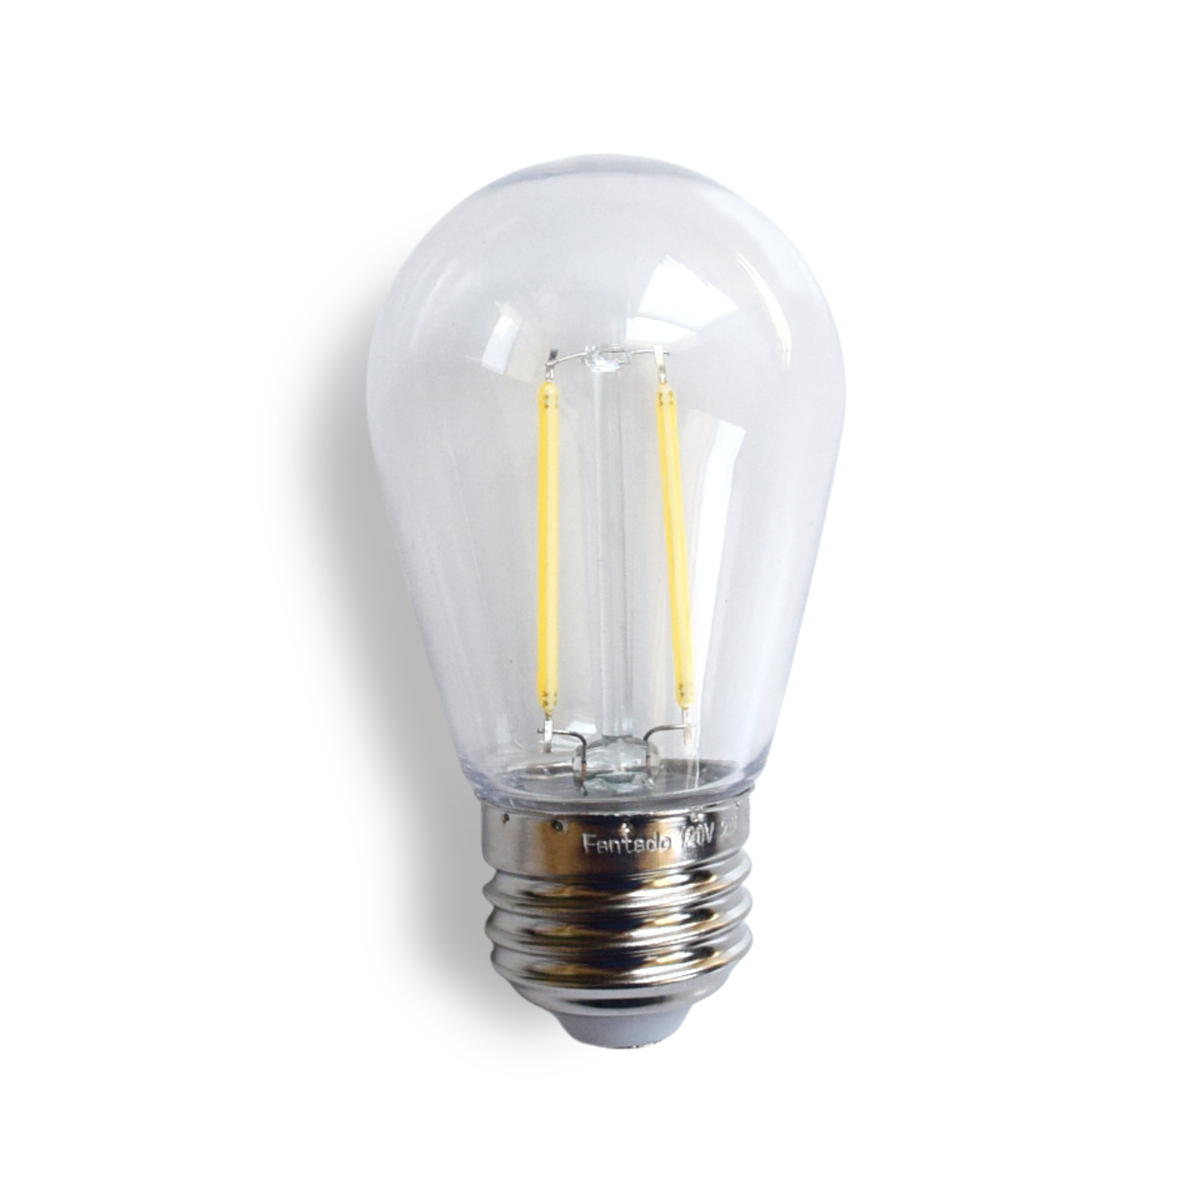 25-Pack Cool White LED Filament S14 Shatterproof Light Bulb, Dimmable, 2W,  E26 Medium Base